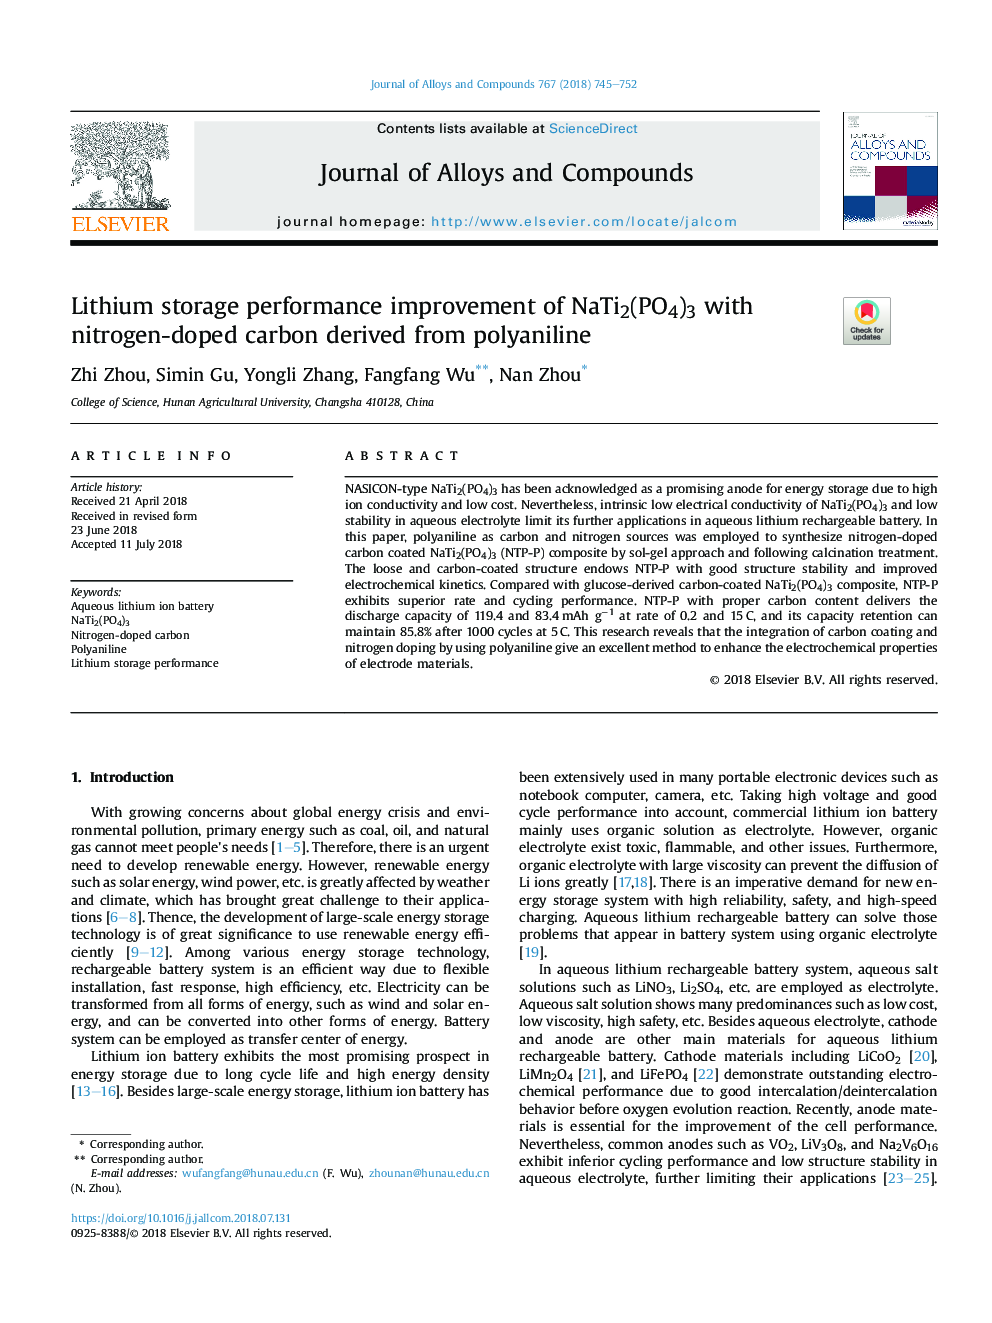 Lithium storage performance improvement of NaTi2(PO4)3 with nitrogen-doped carbon derived from polyaniline